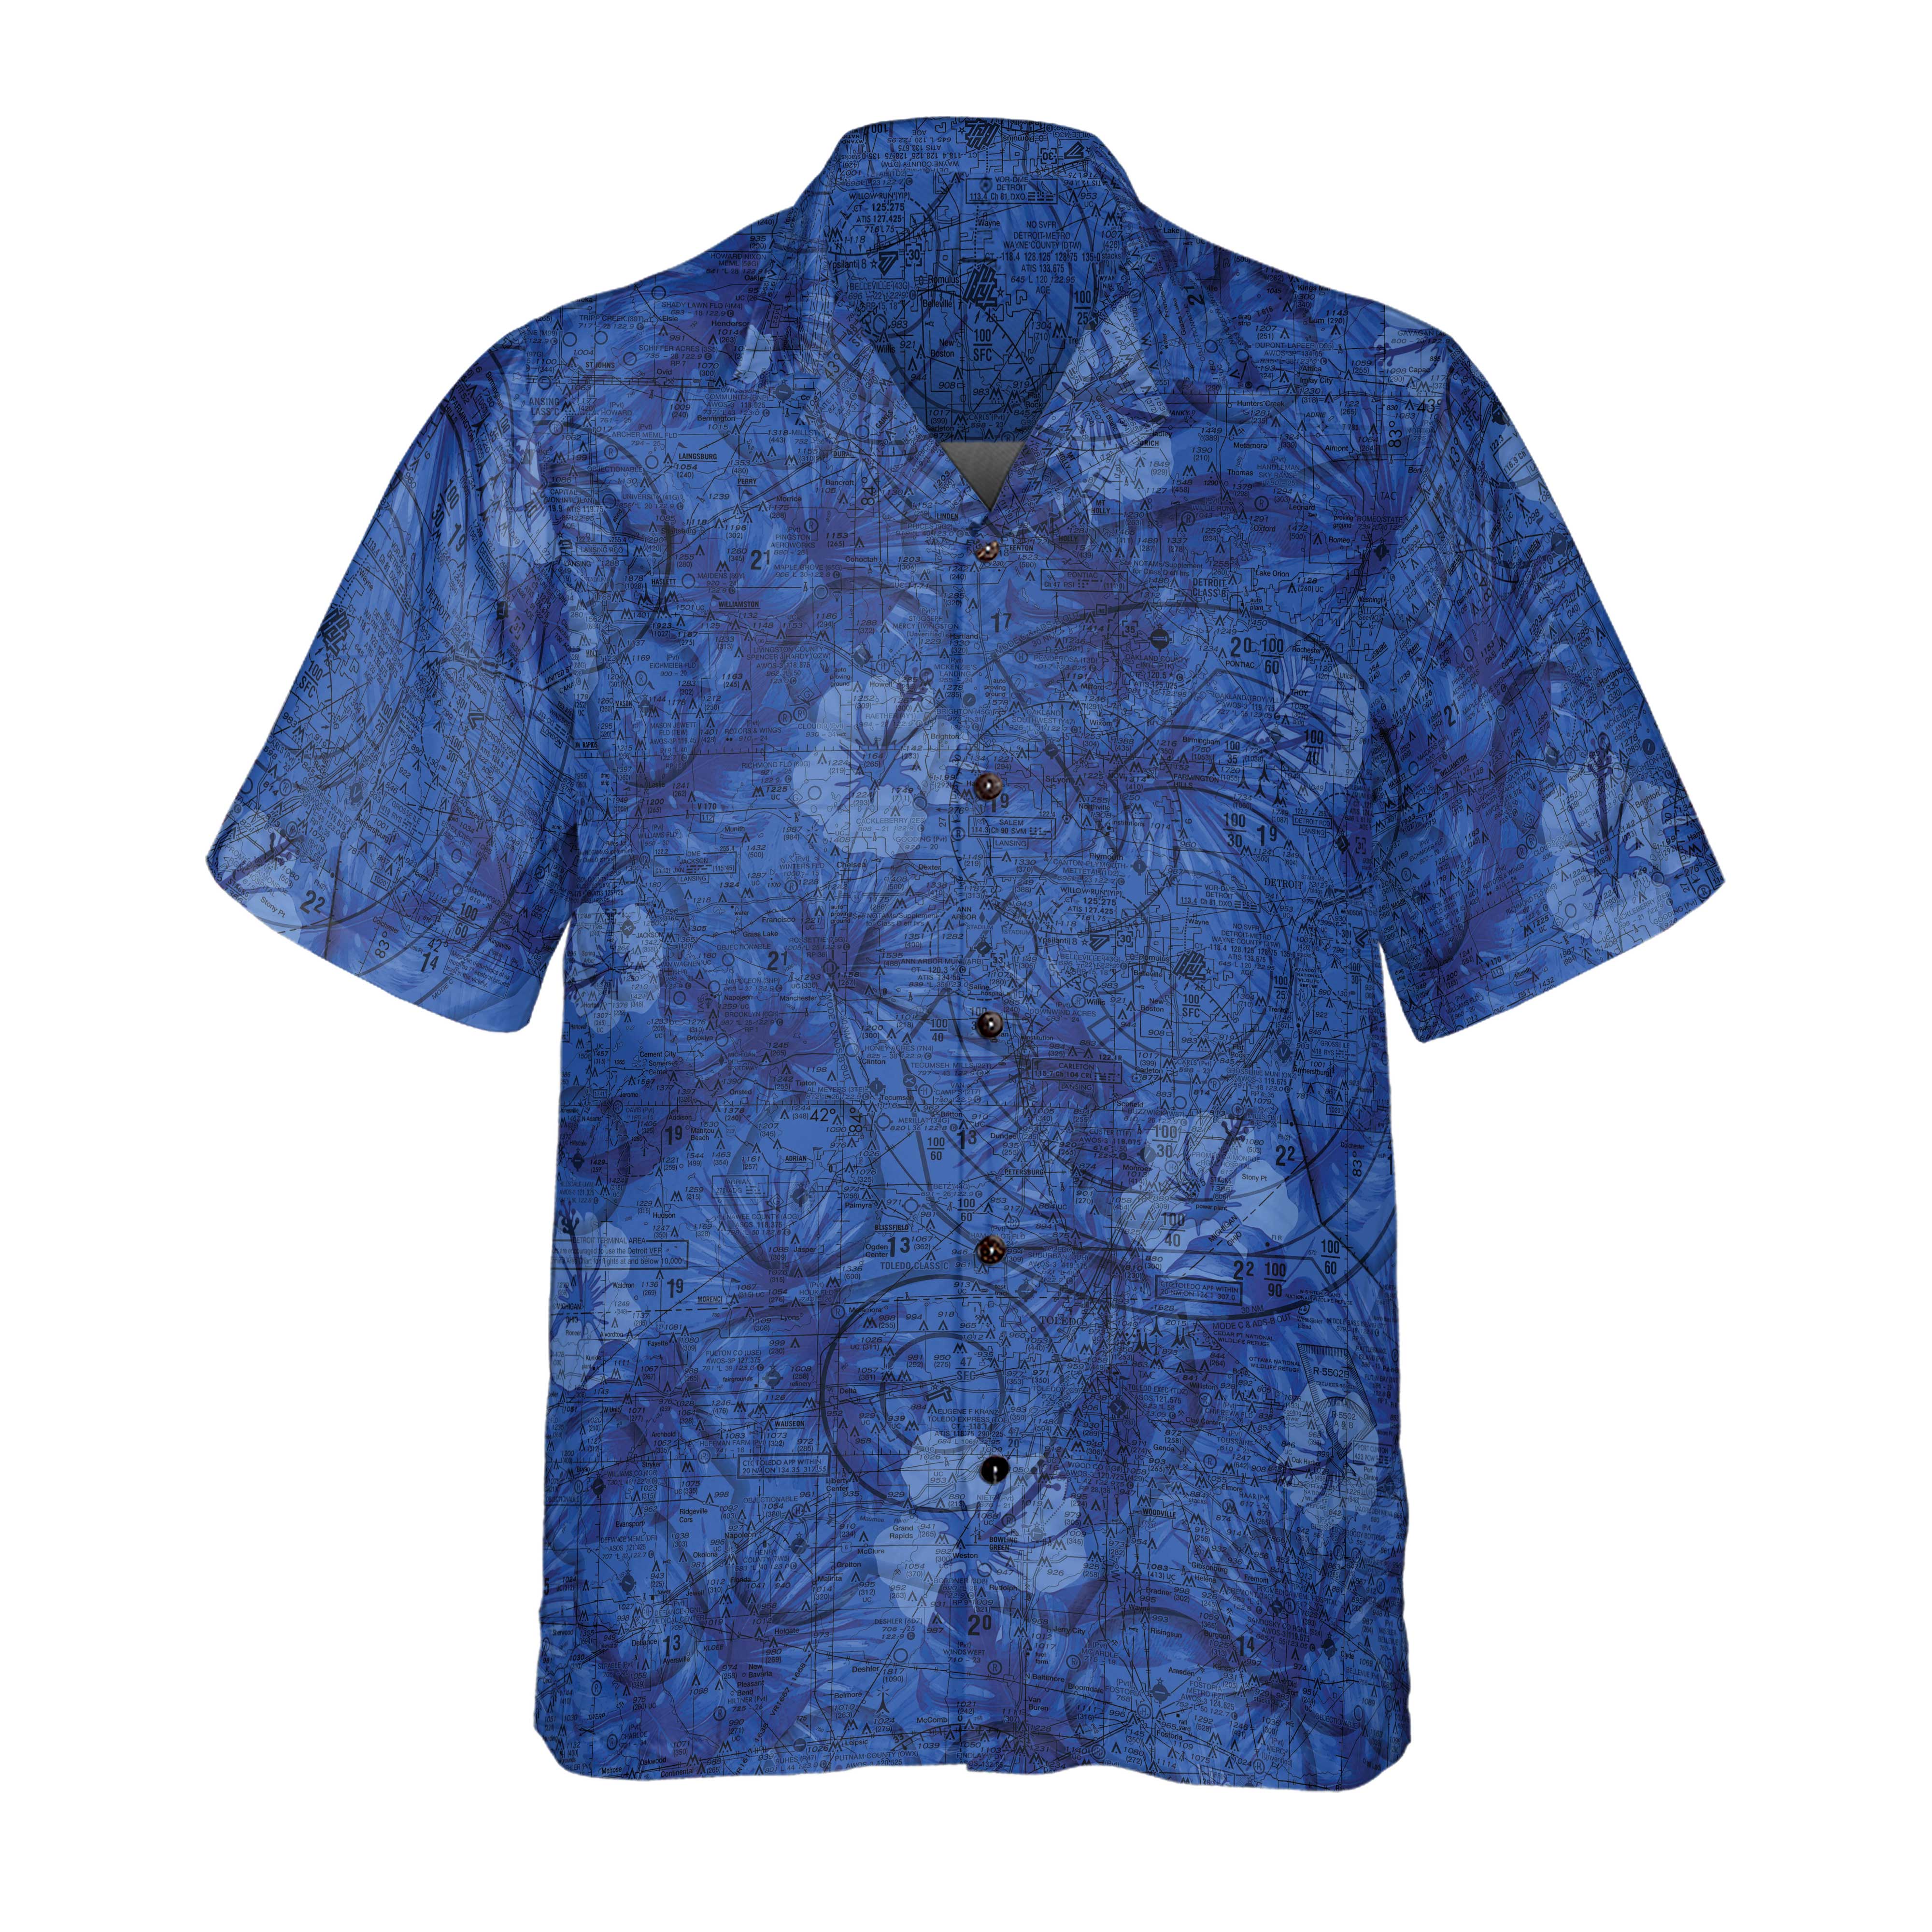 The Detroit Blue Summer Flowers Coconut Button Camp Shirt